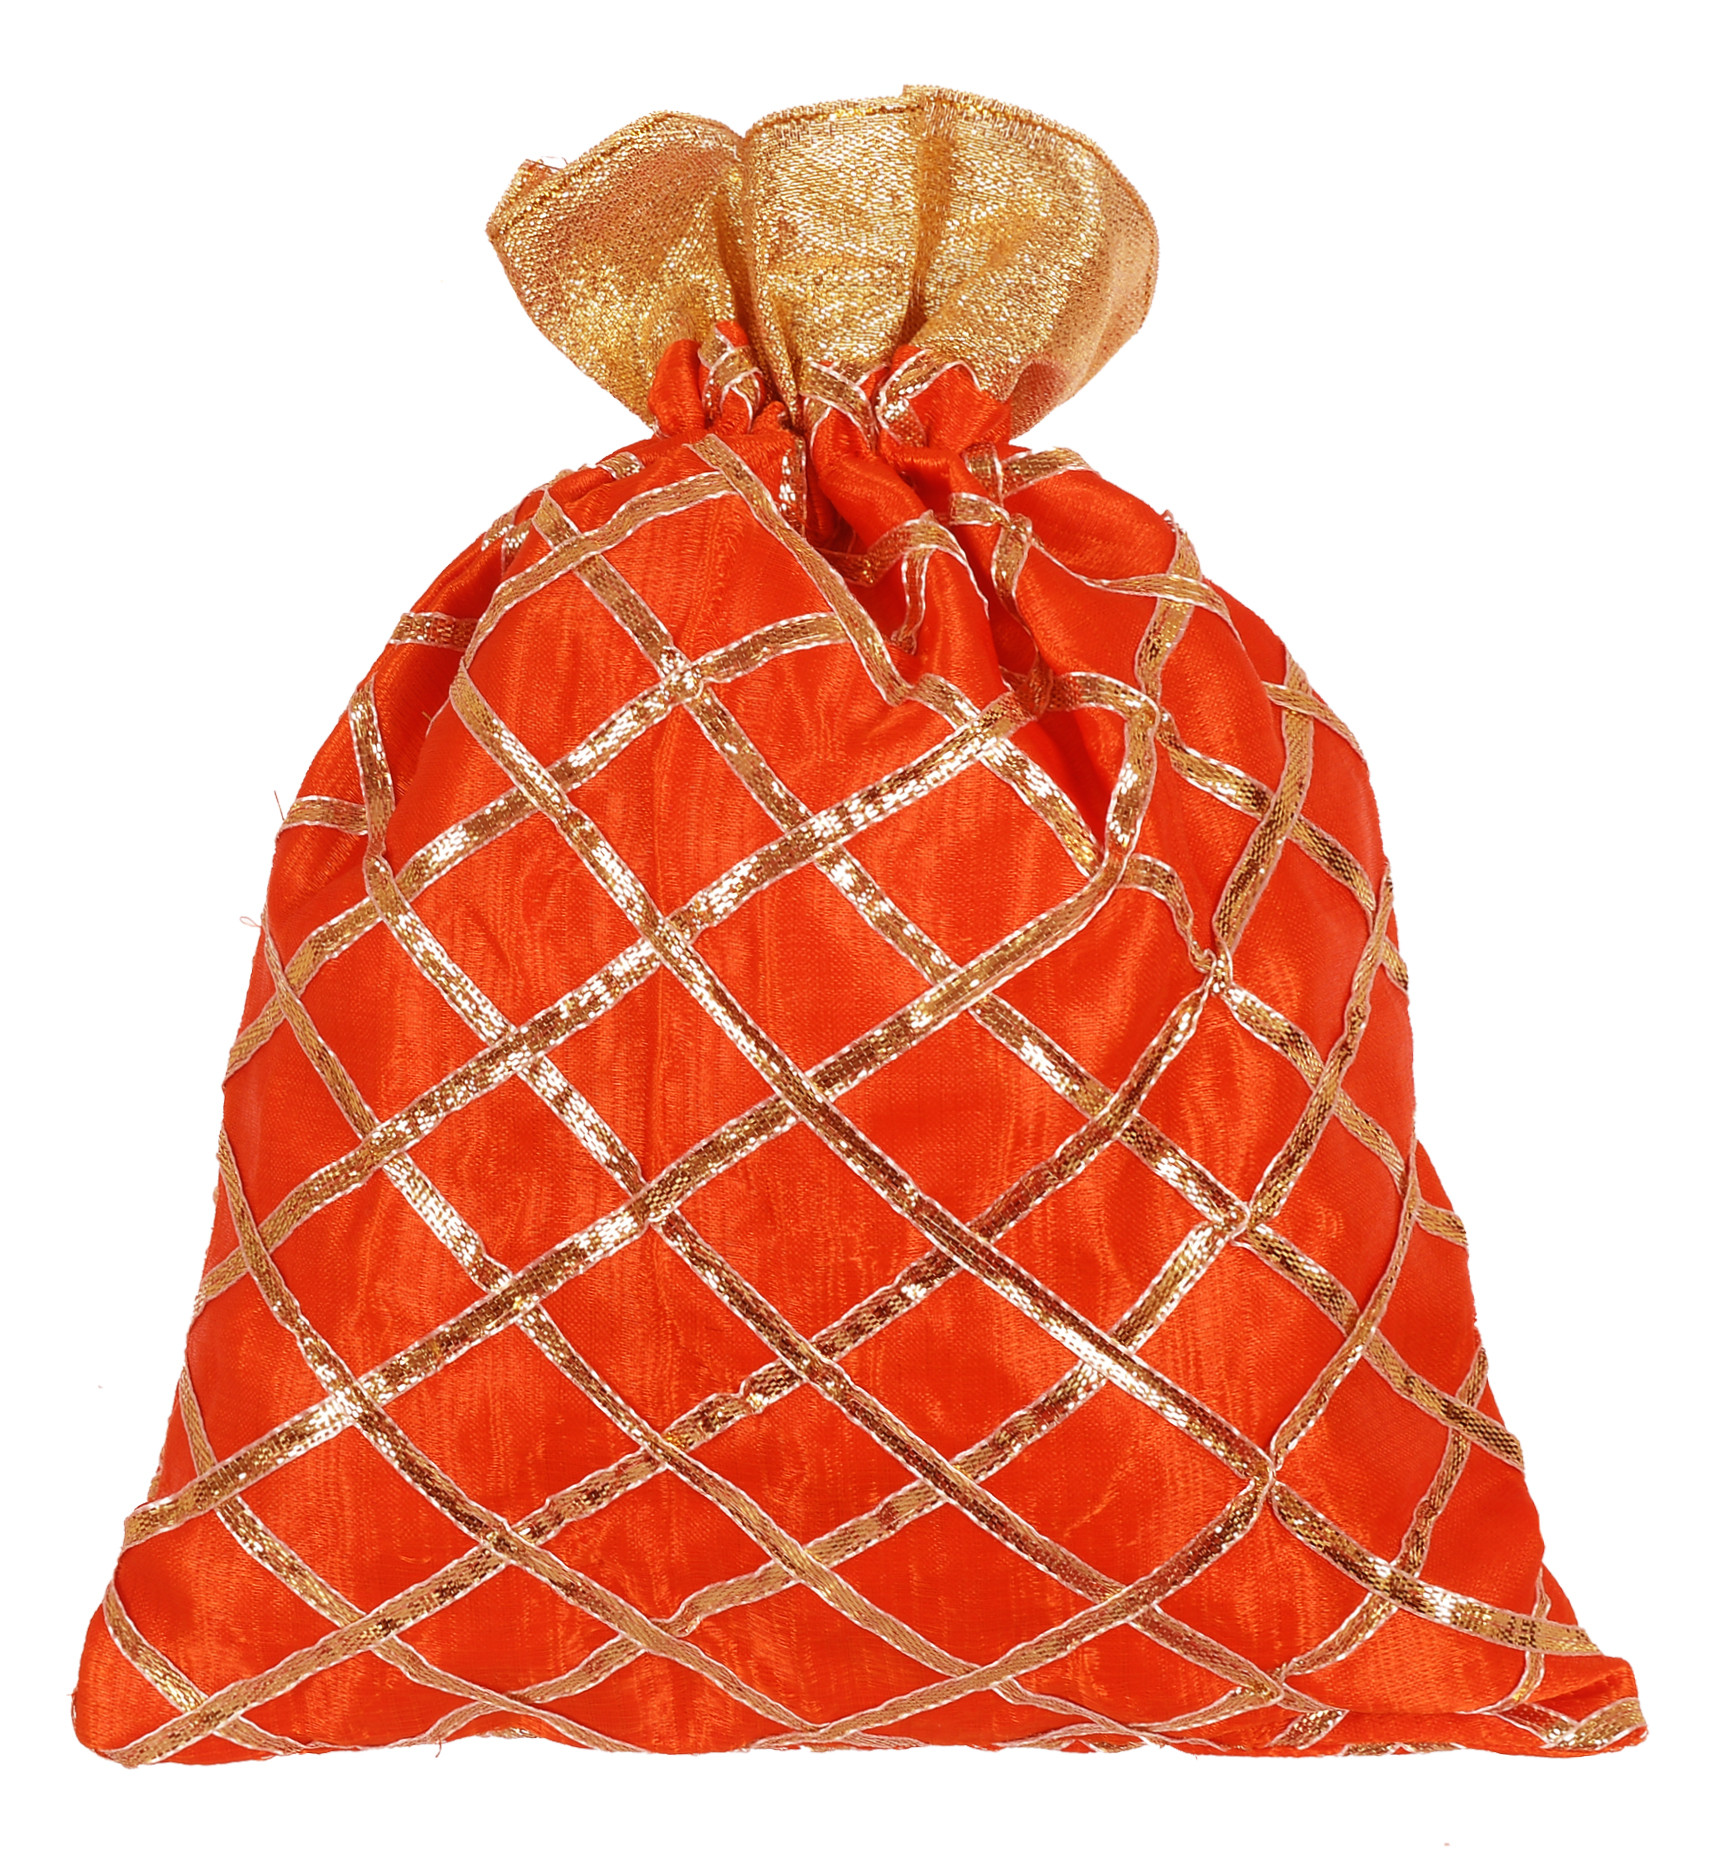 Kuber Industries Drawstring Potli Bag Party Wedding Favor Gift Jewelry Bags-(Orange & Pink)